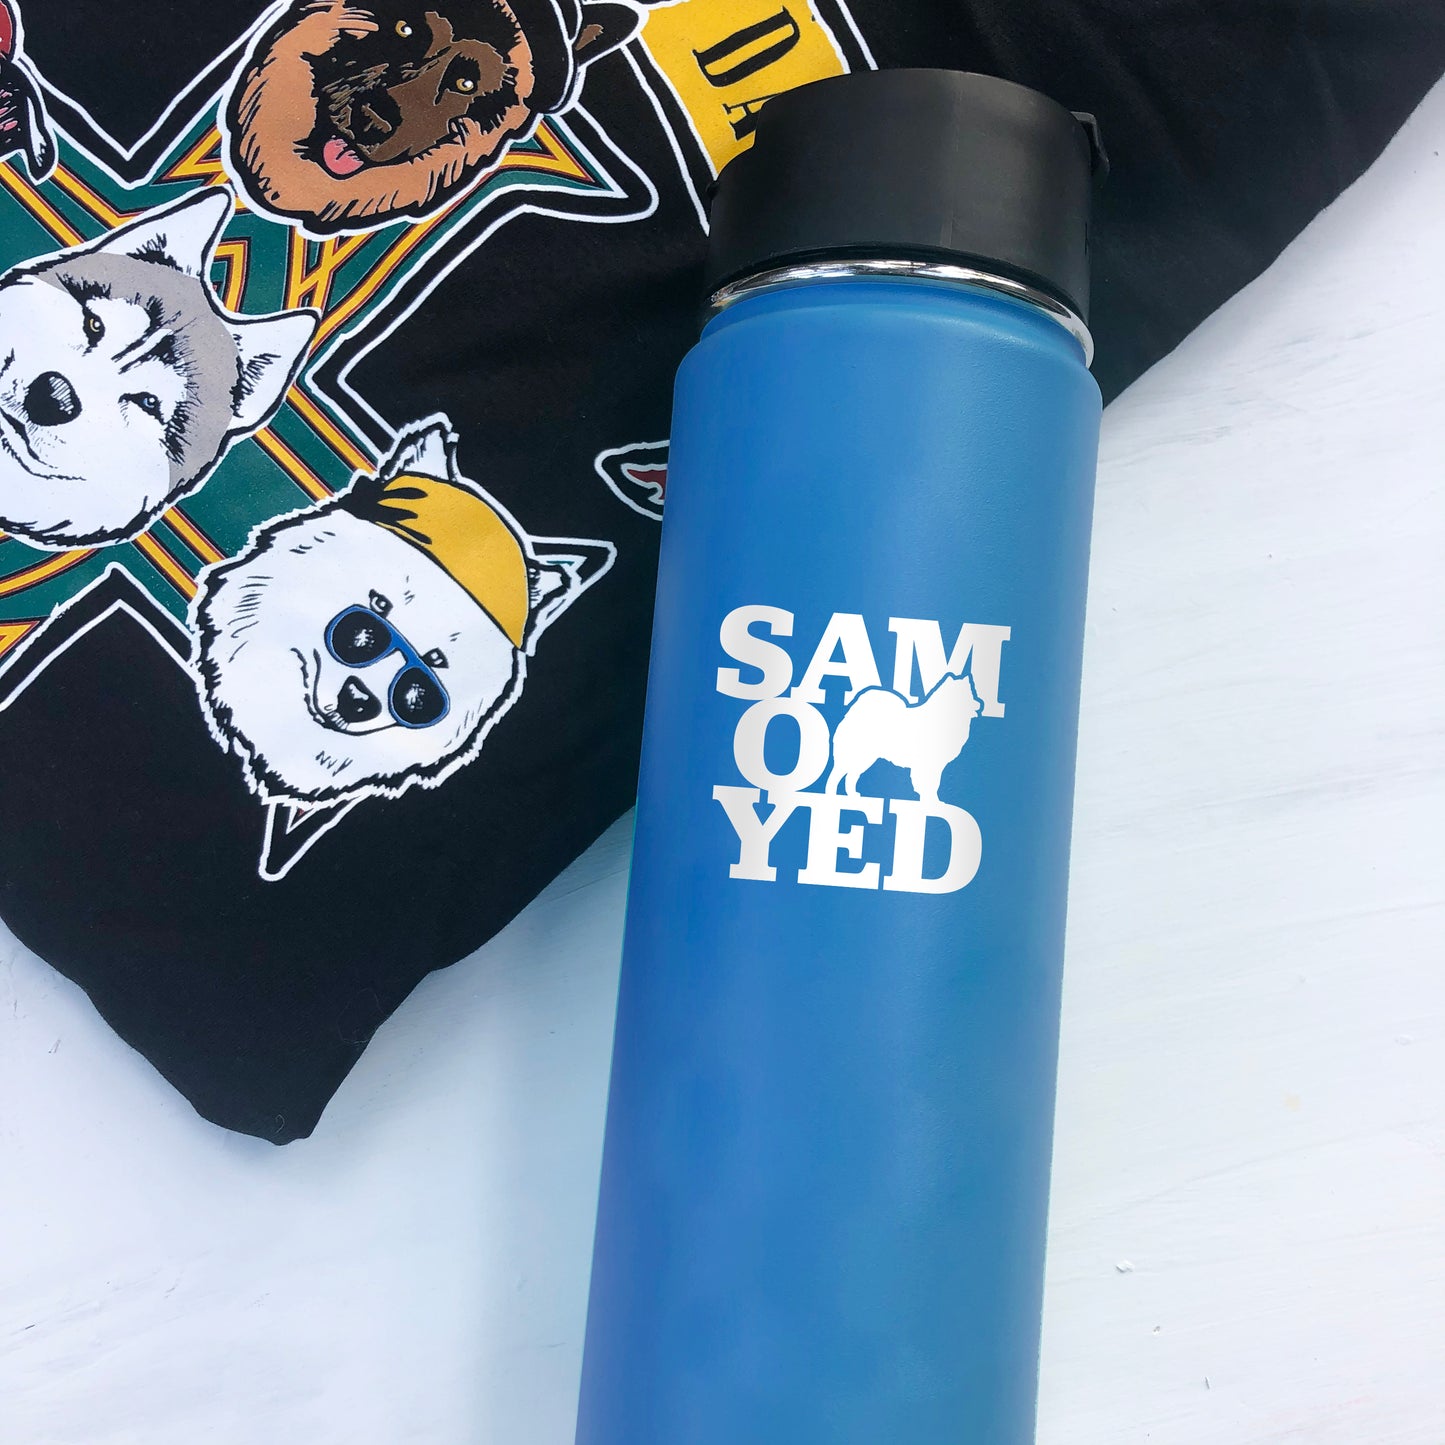 Samoyed Mini Decals - Vinyl Decal - Water Bottle, Laptop, Bike, Sled